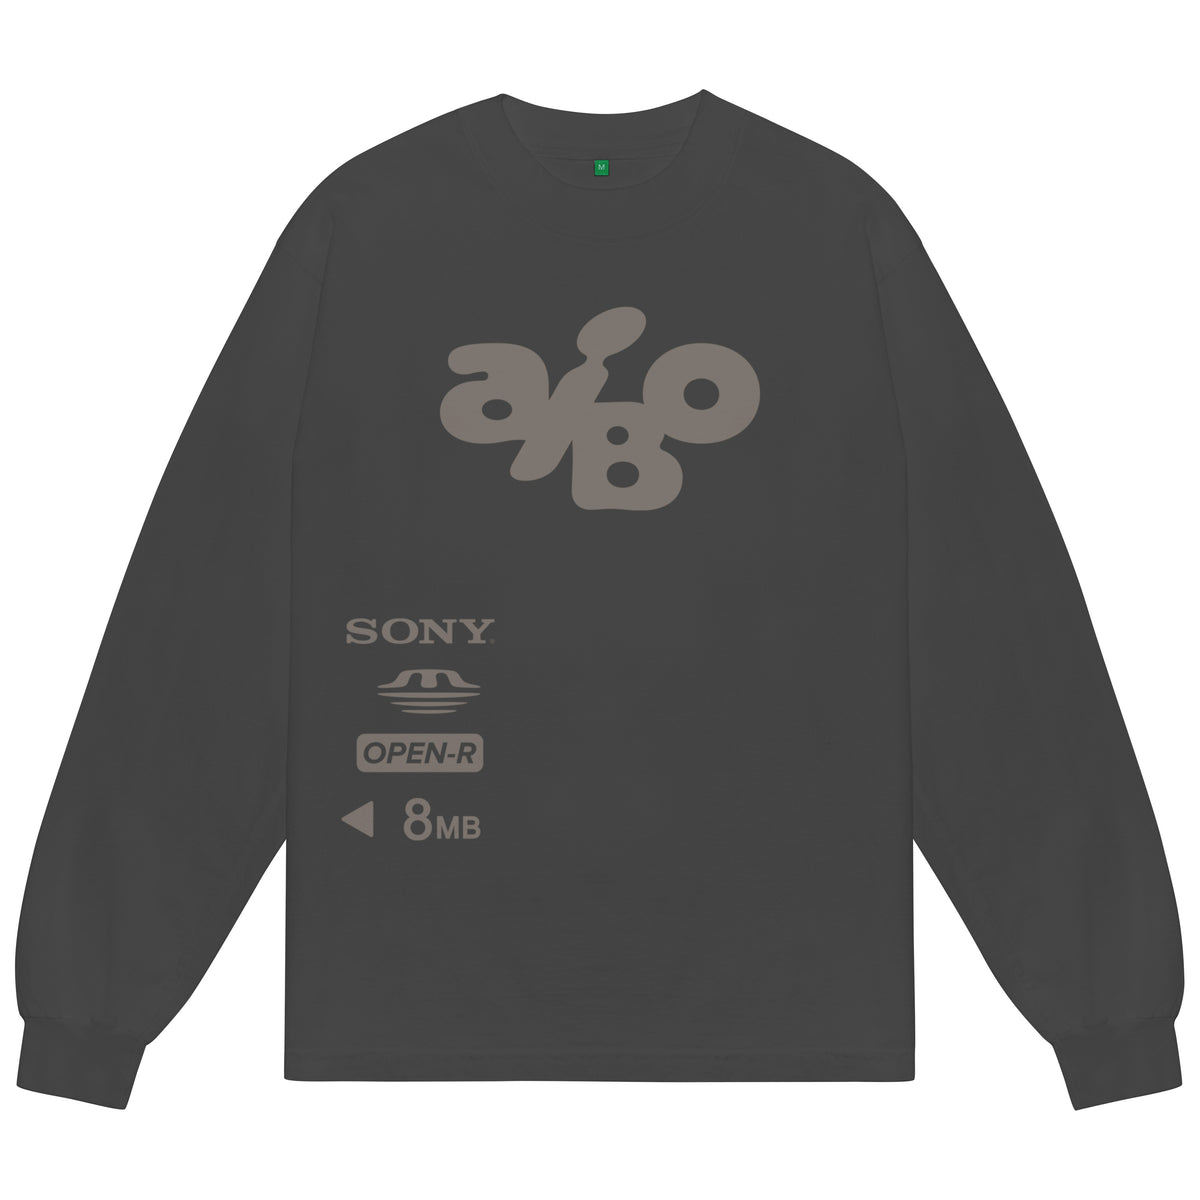 Aibo LS Shirt (Vintage Black)